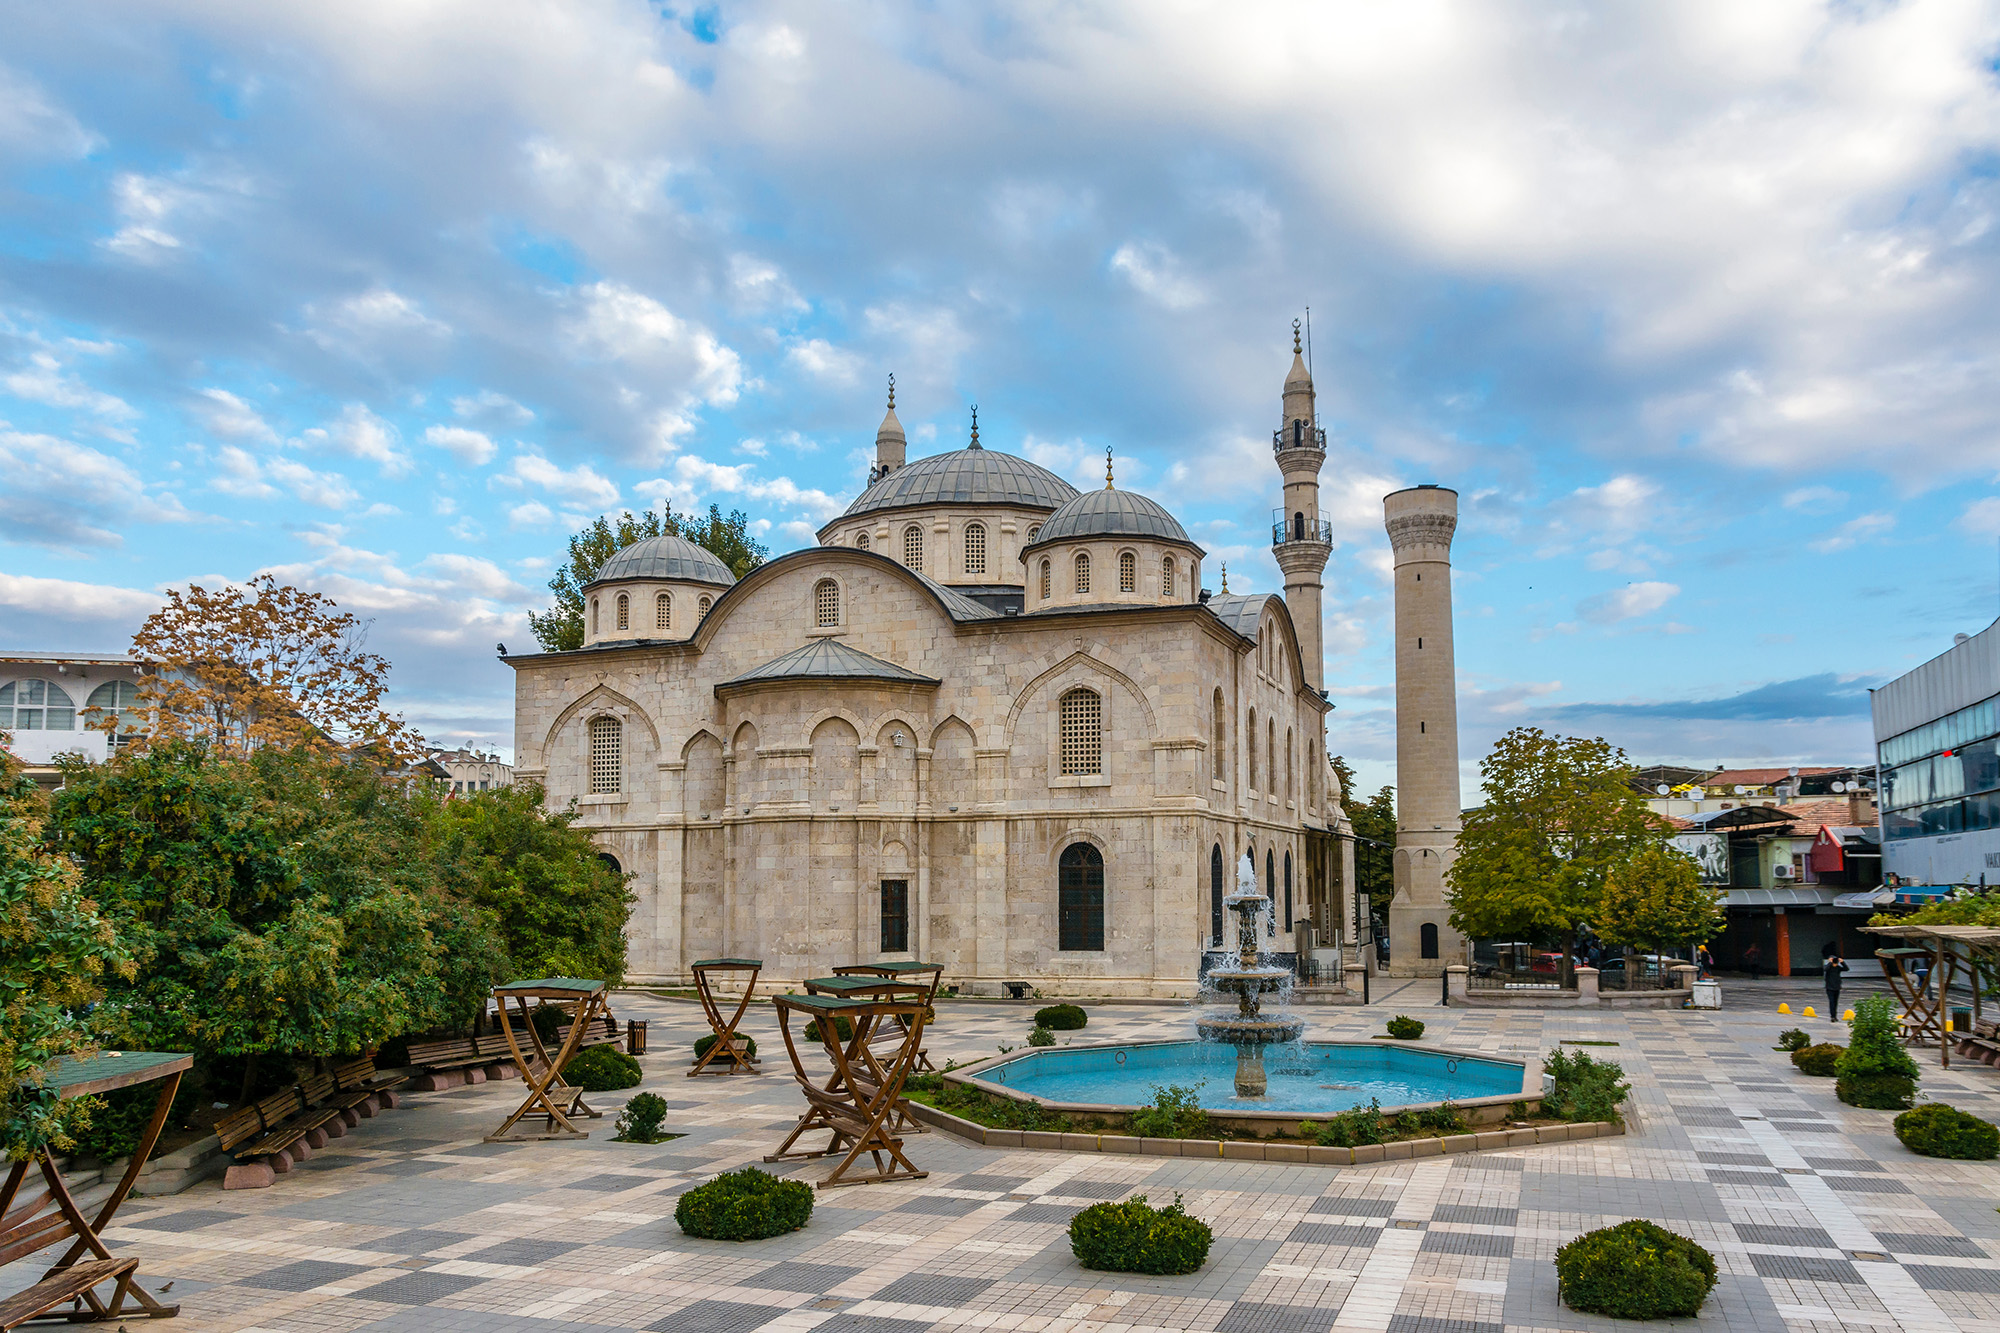 Yeni Mosque in Malatya, Turkey.